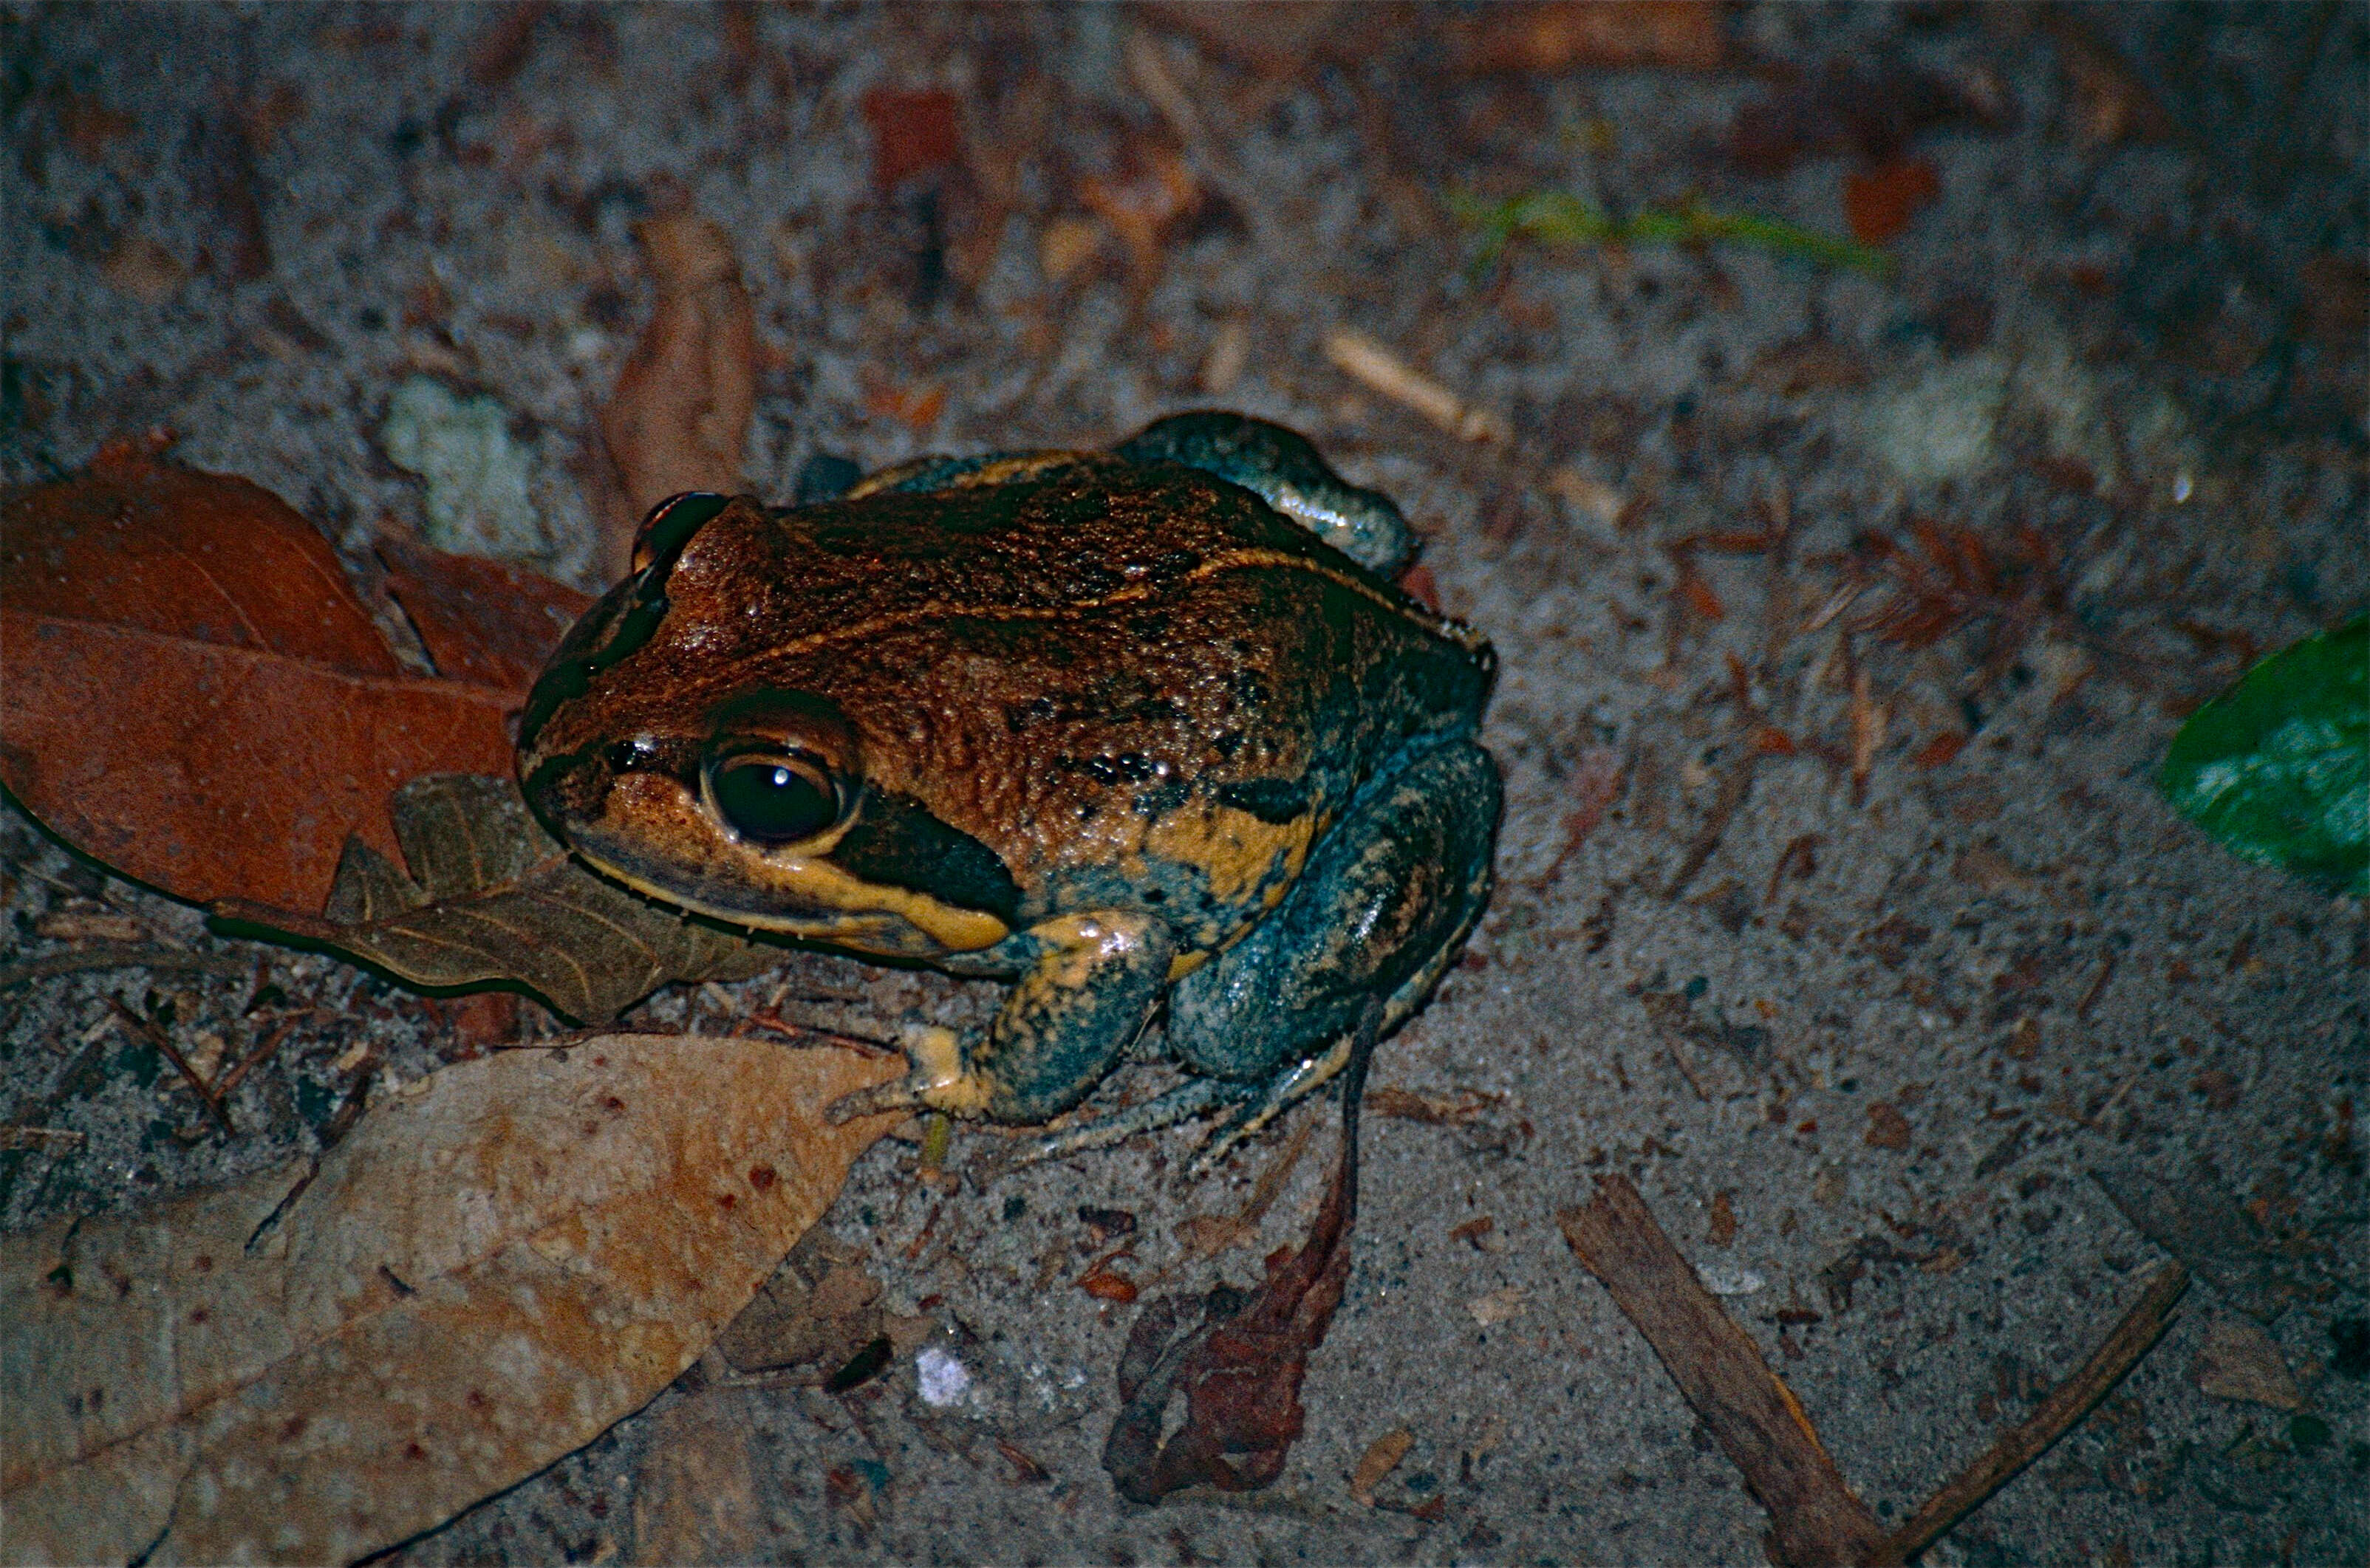 Image of Northern Banjo Frog